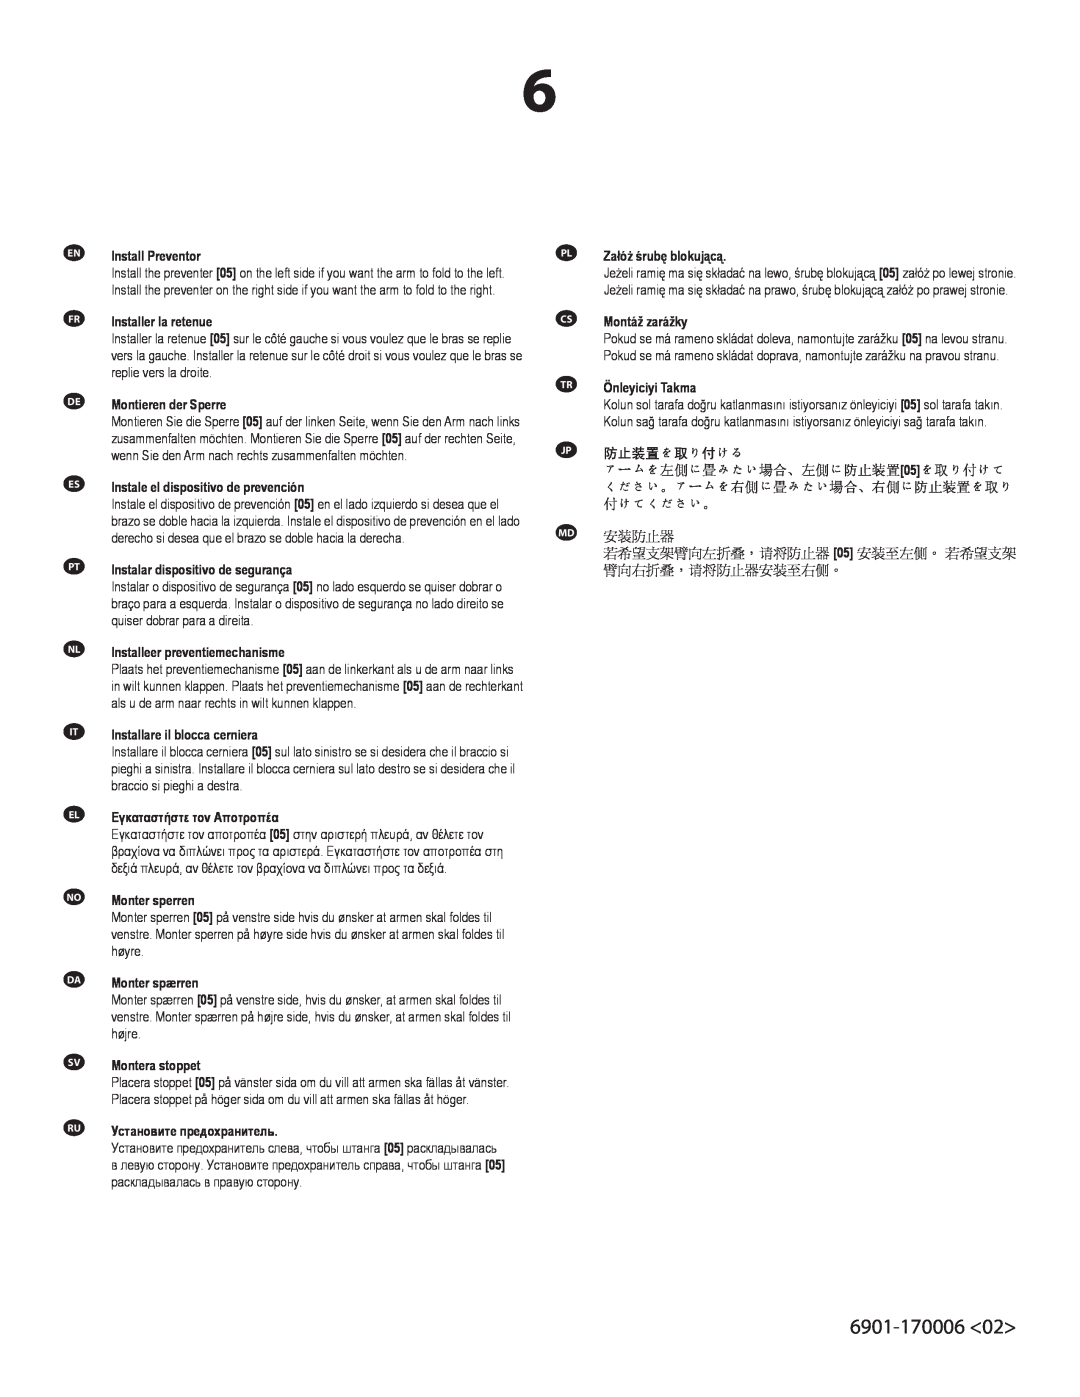 Sanus Systems VM400 important safety instructions 6901-170006, Install Preventor 